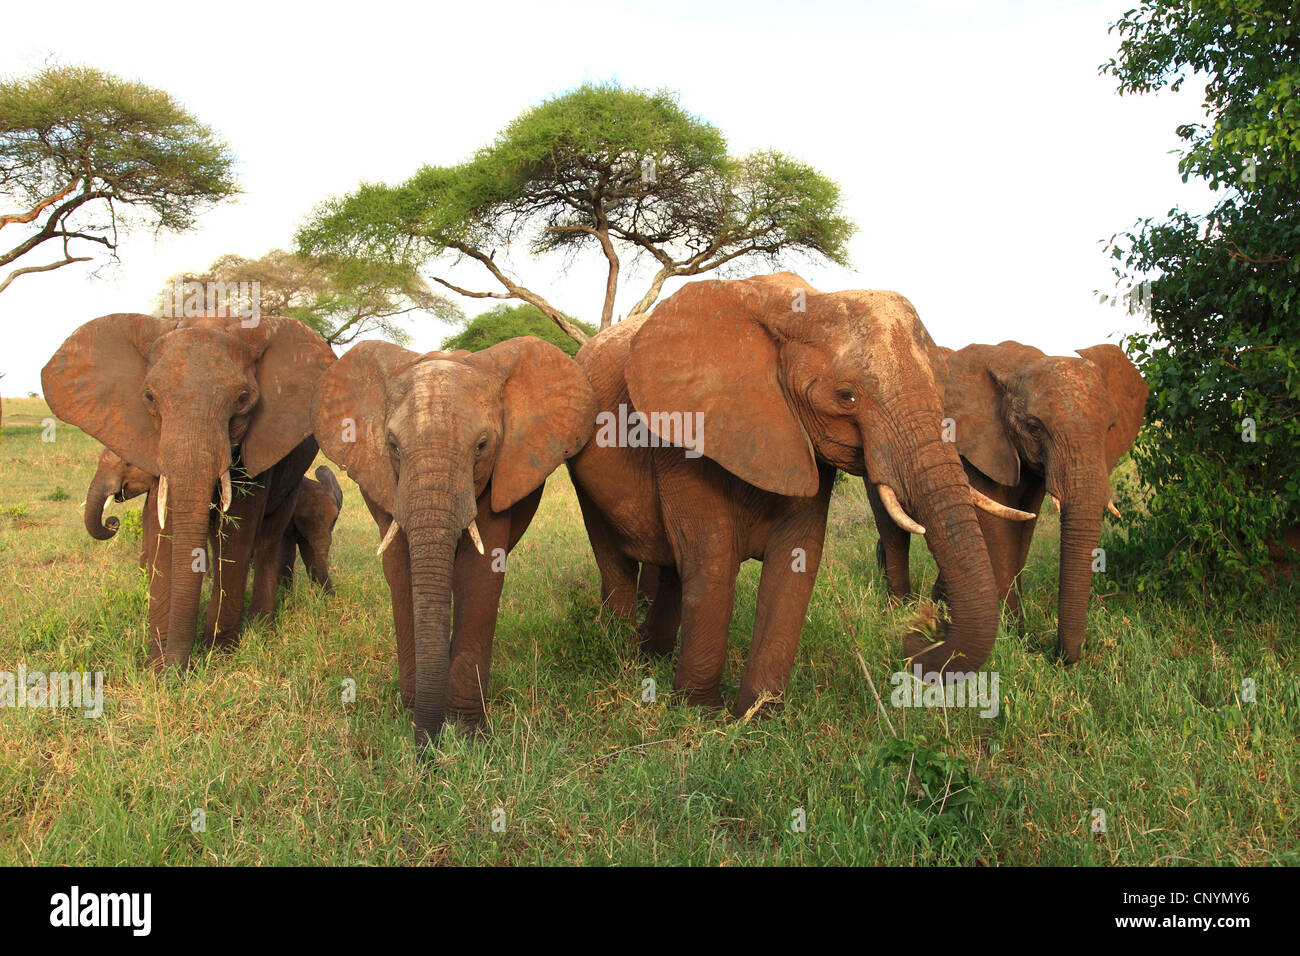 African savannah elephant, African elephant (Loxodonta africana oxyotis), herd of elephants walking in high gras, Tanzania, Tarangire National Park Stock Photo